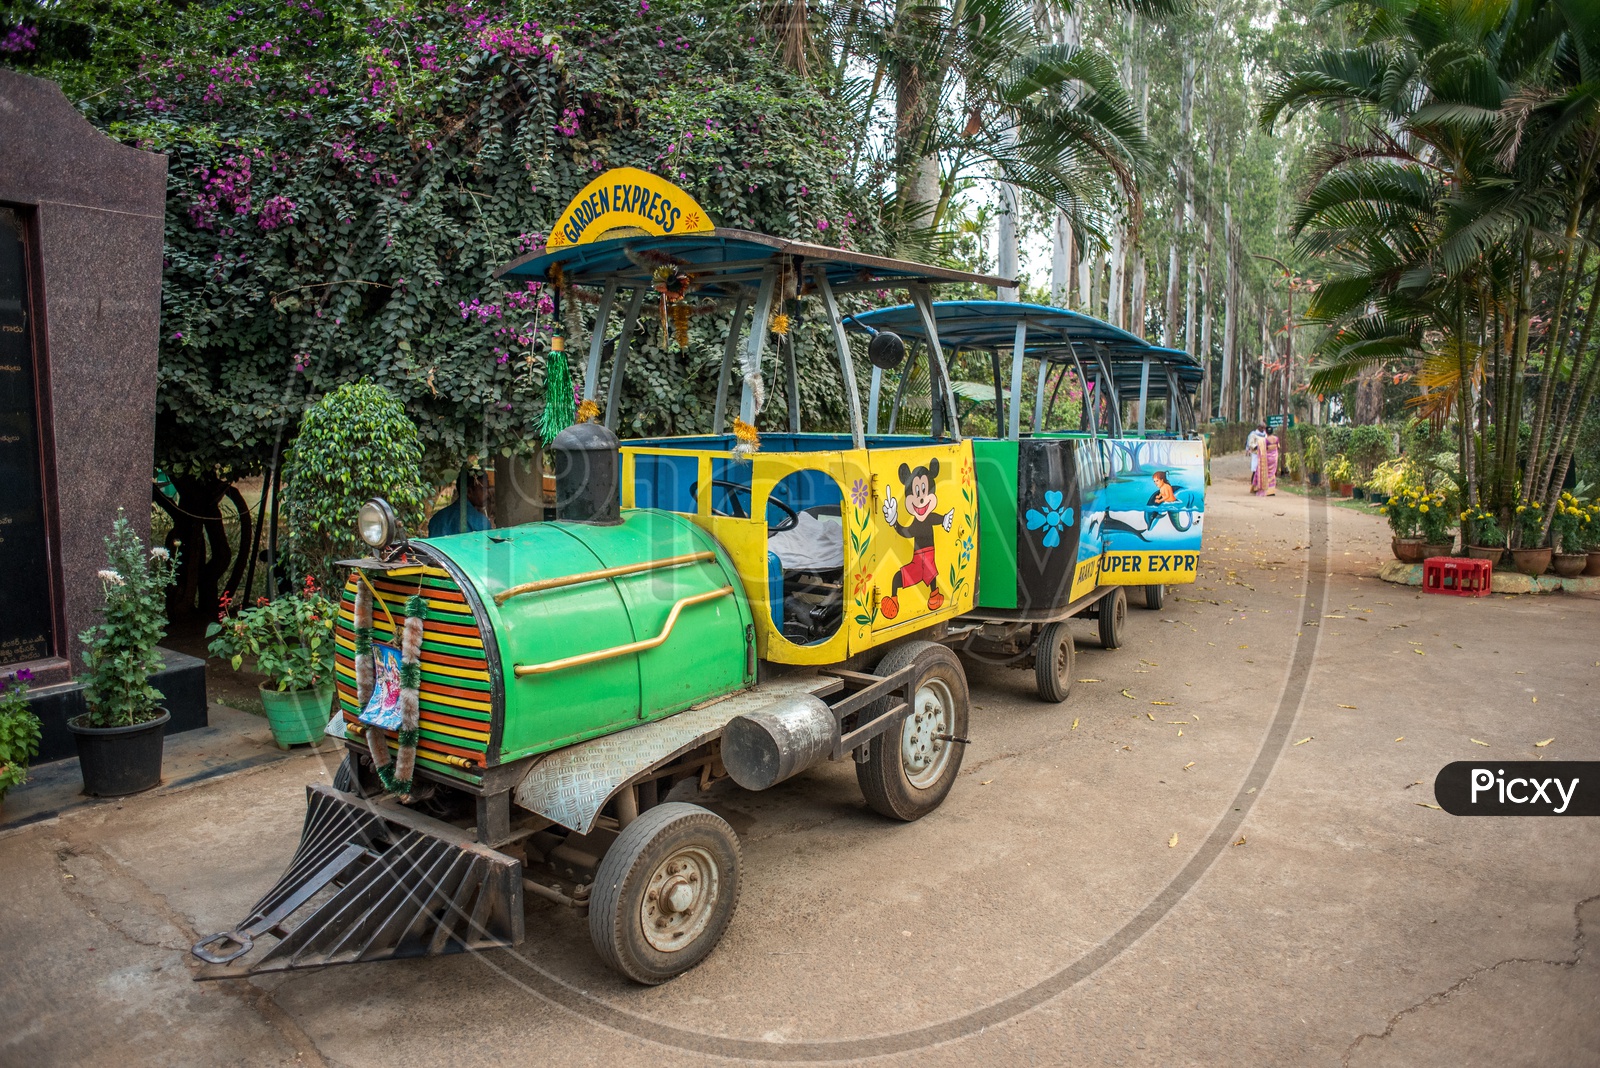 Toy train in botanical gardens